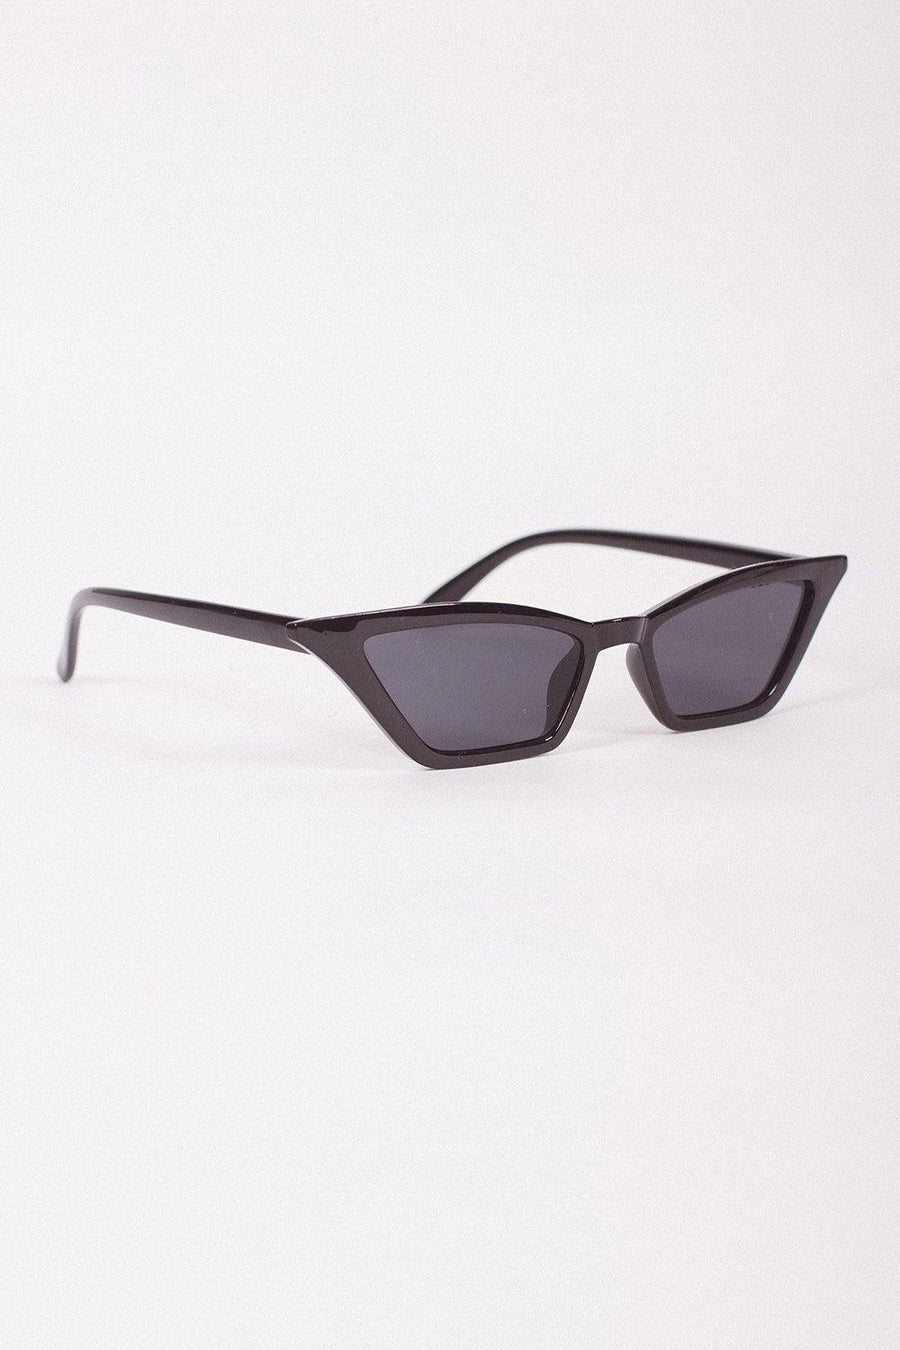 Black Cat Eye Sunglasses - Mawoolisa